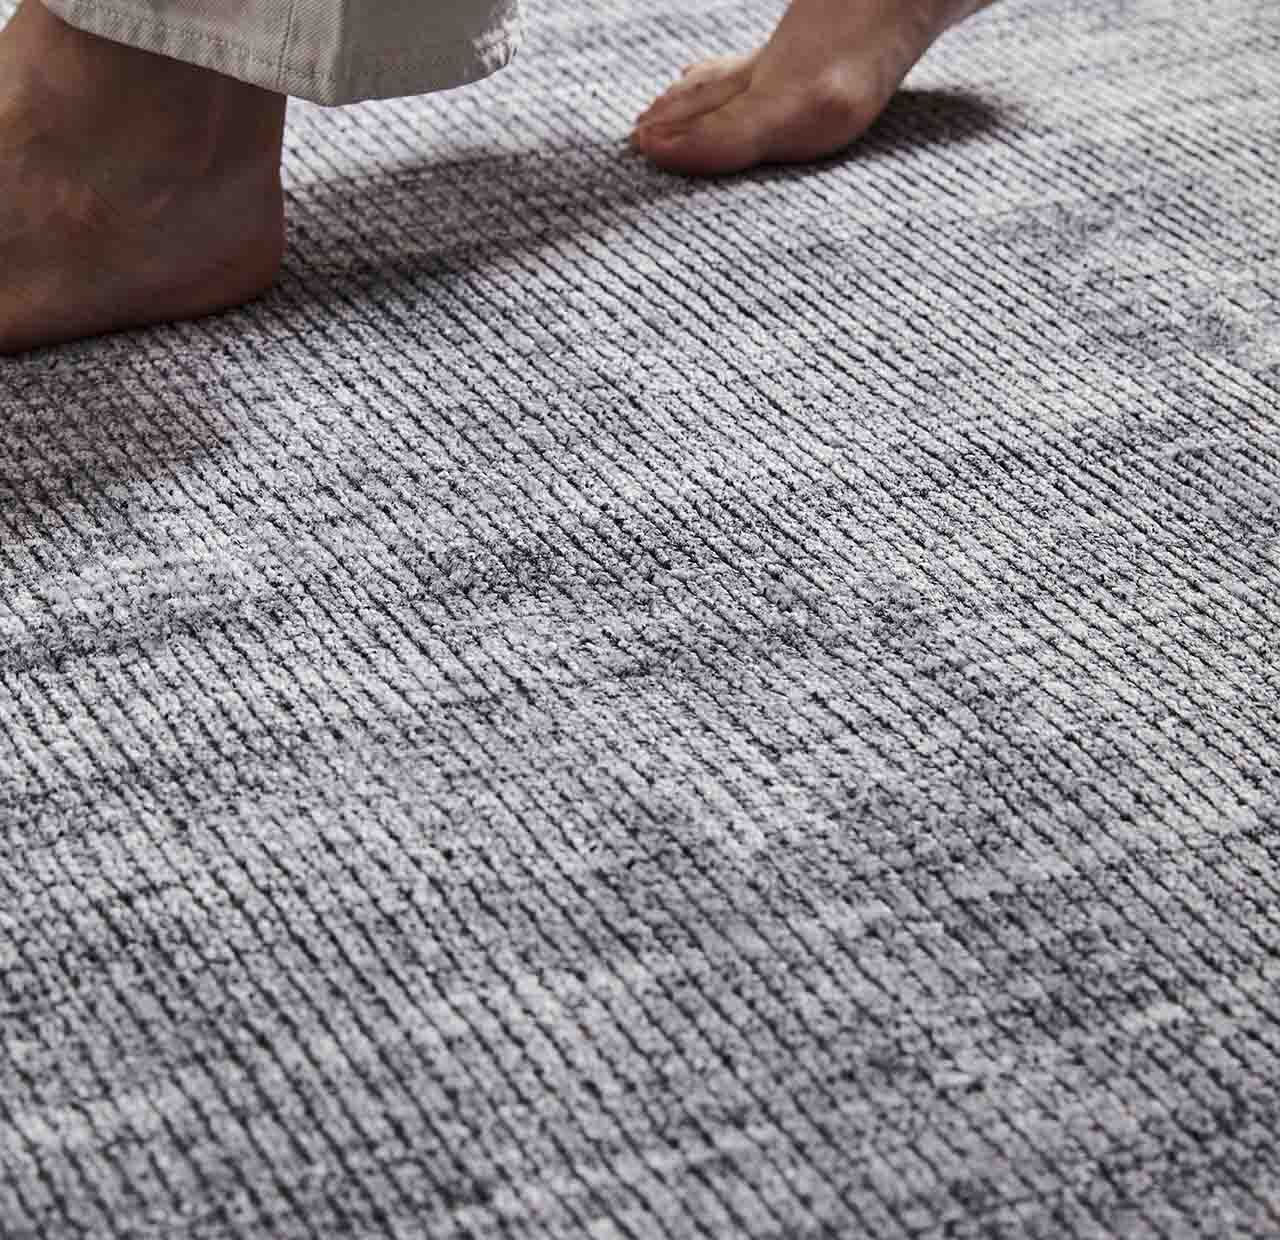 Weave Travertine Floor Rug - Pewter RTV71PEWT